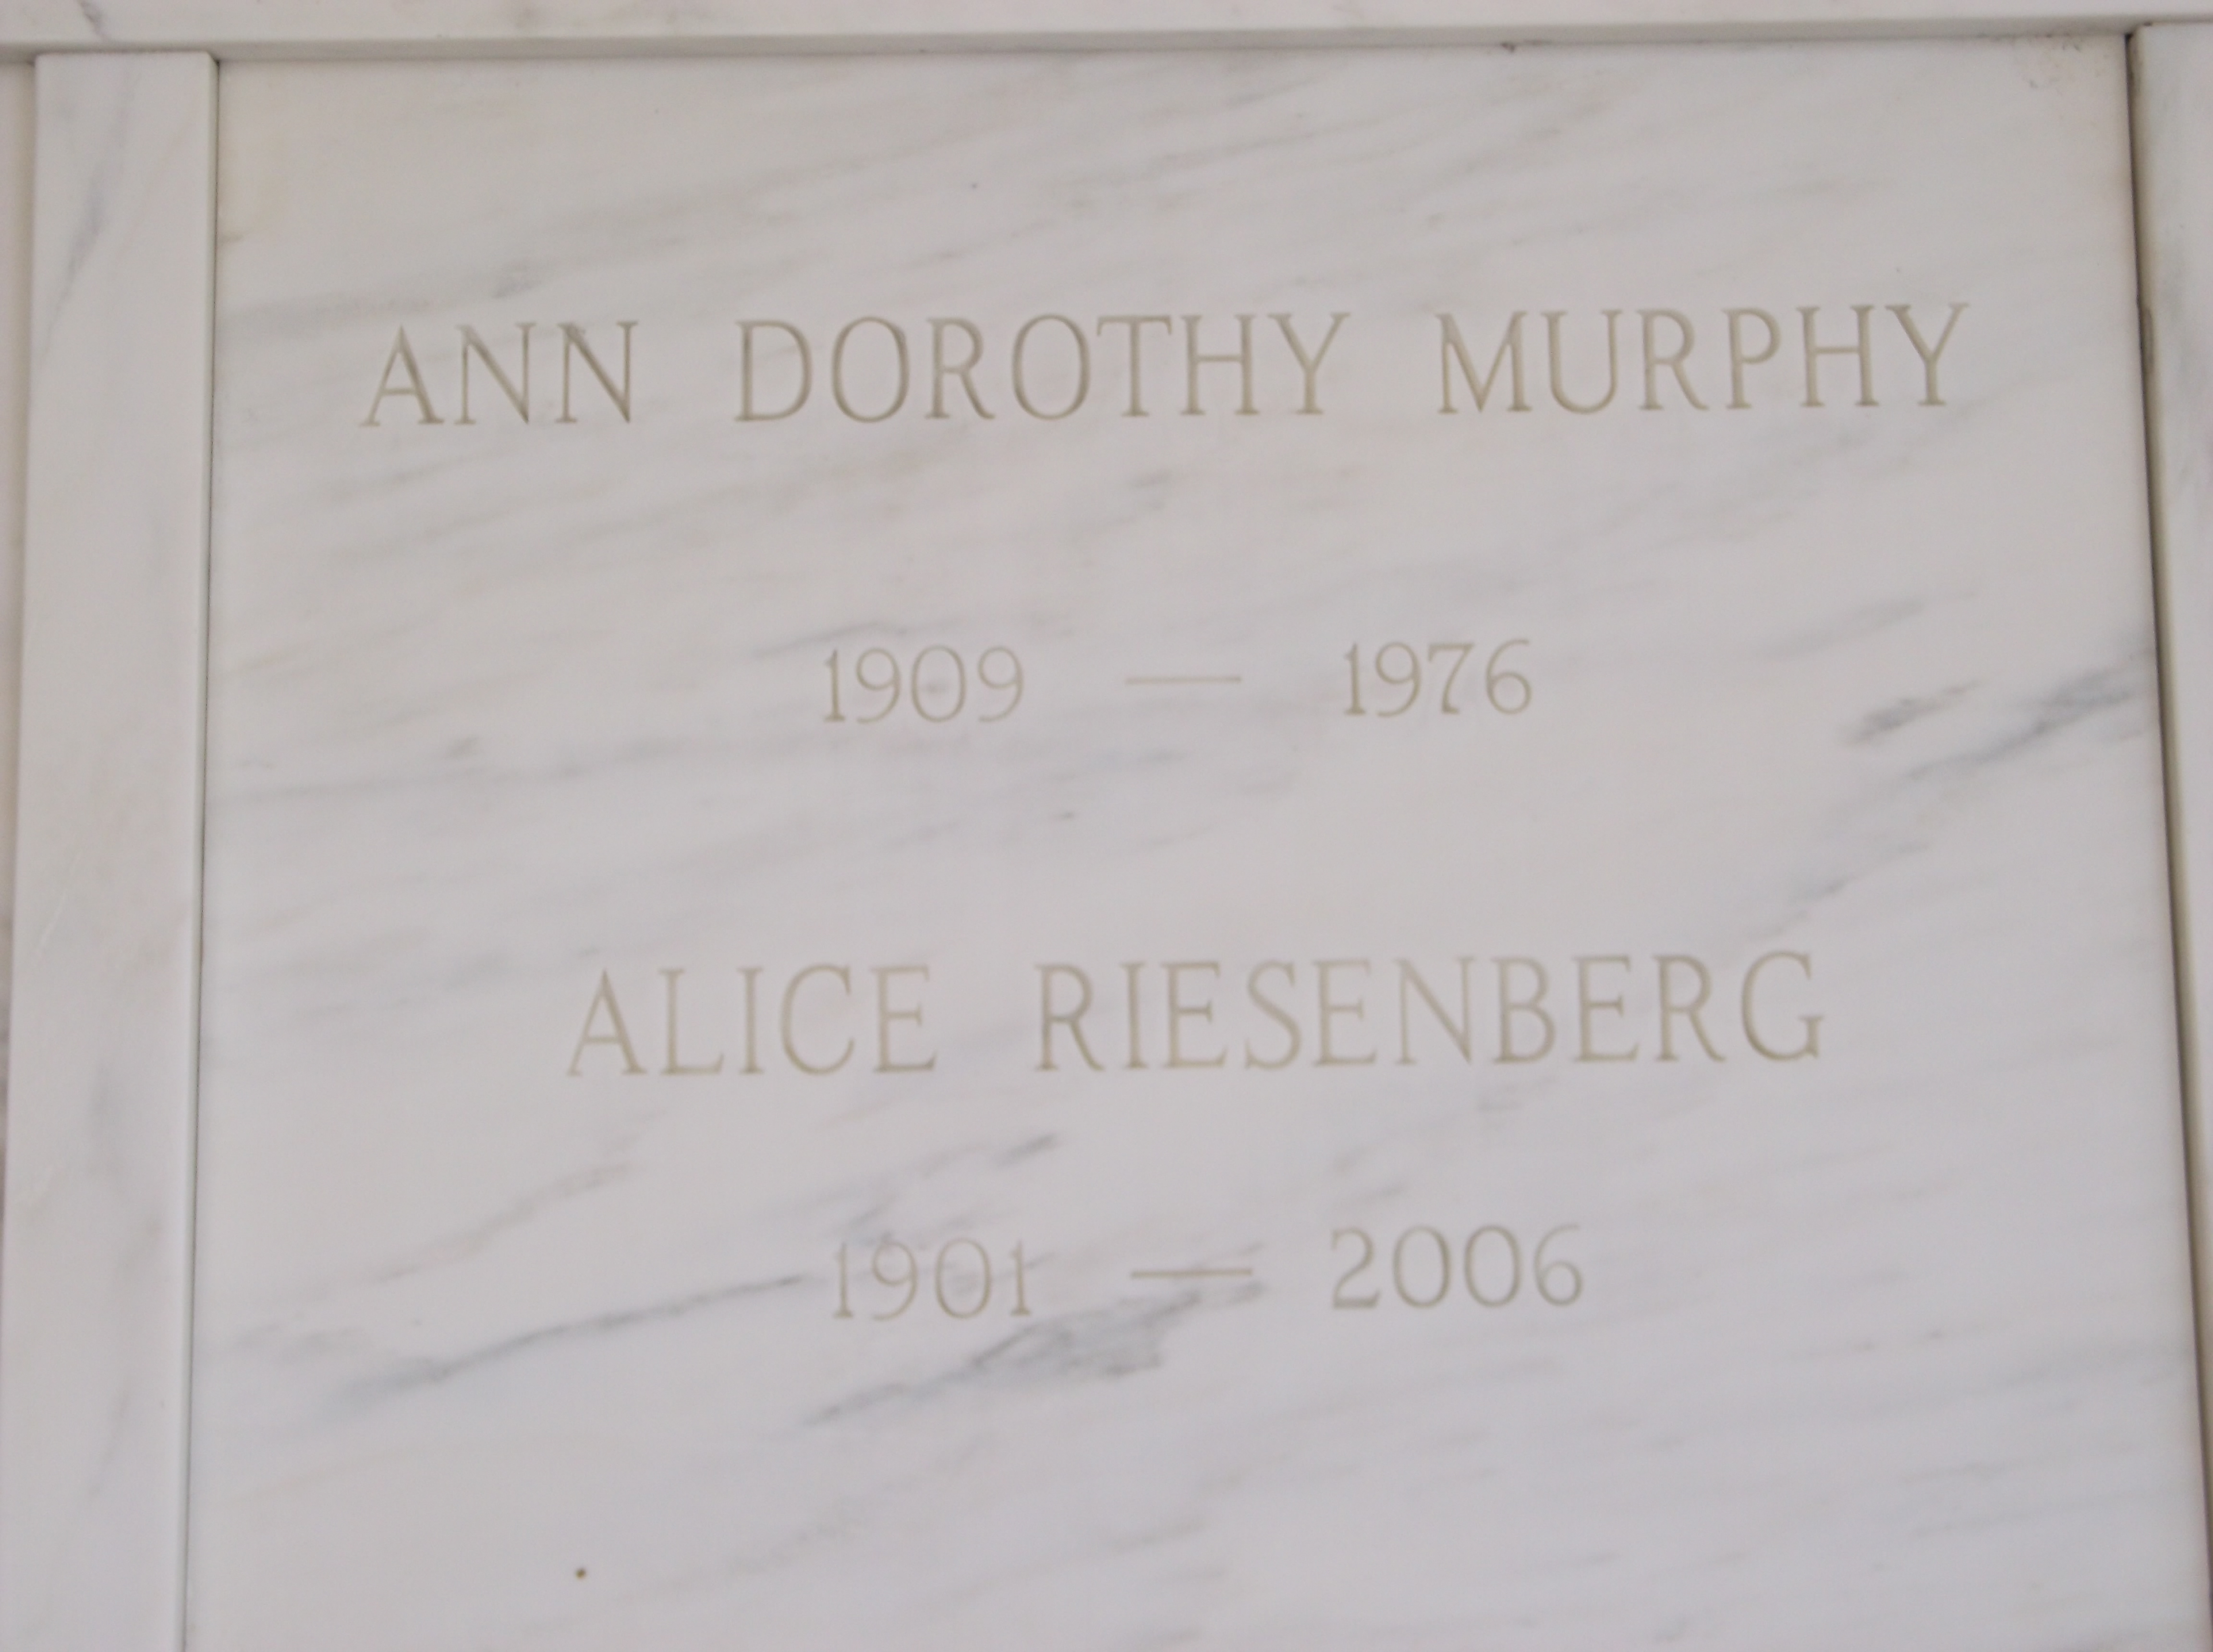 Ann Dorothy Murphy